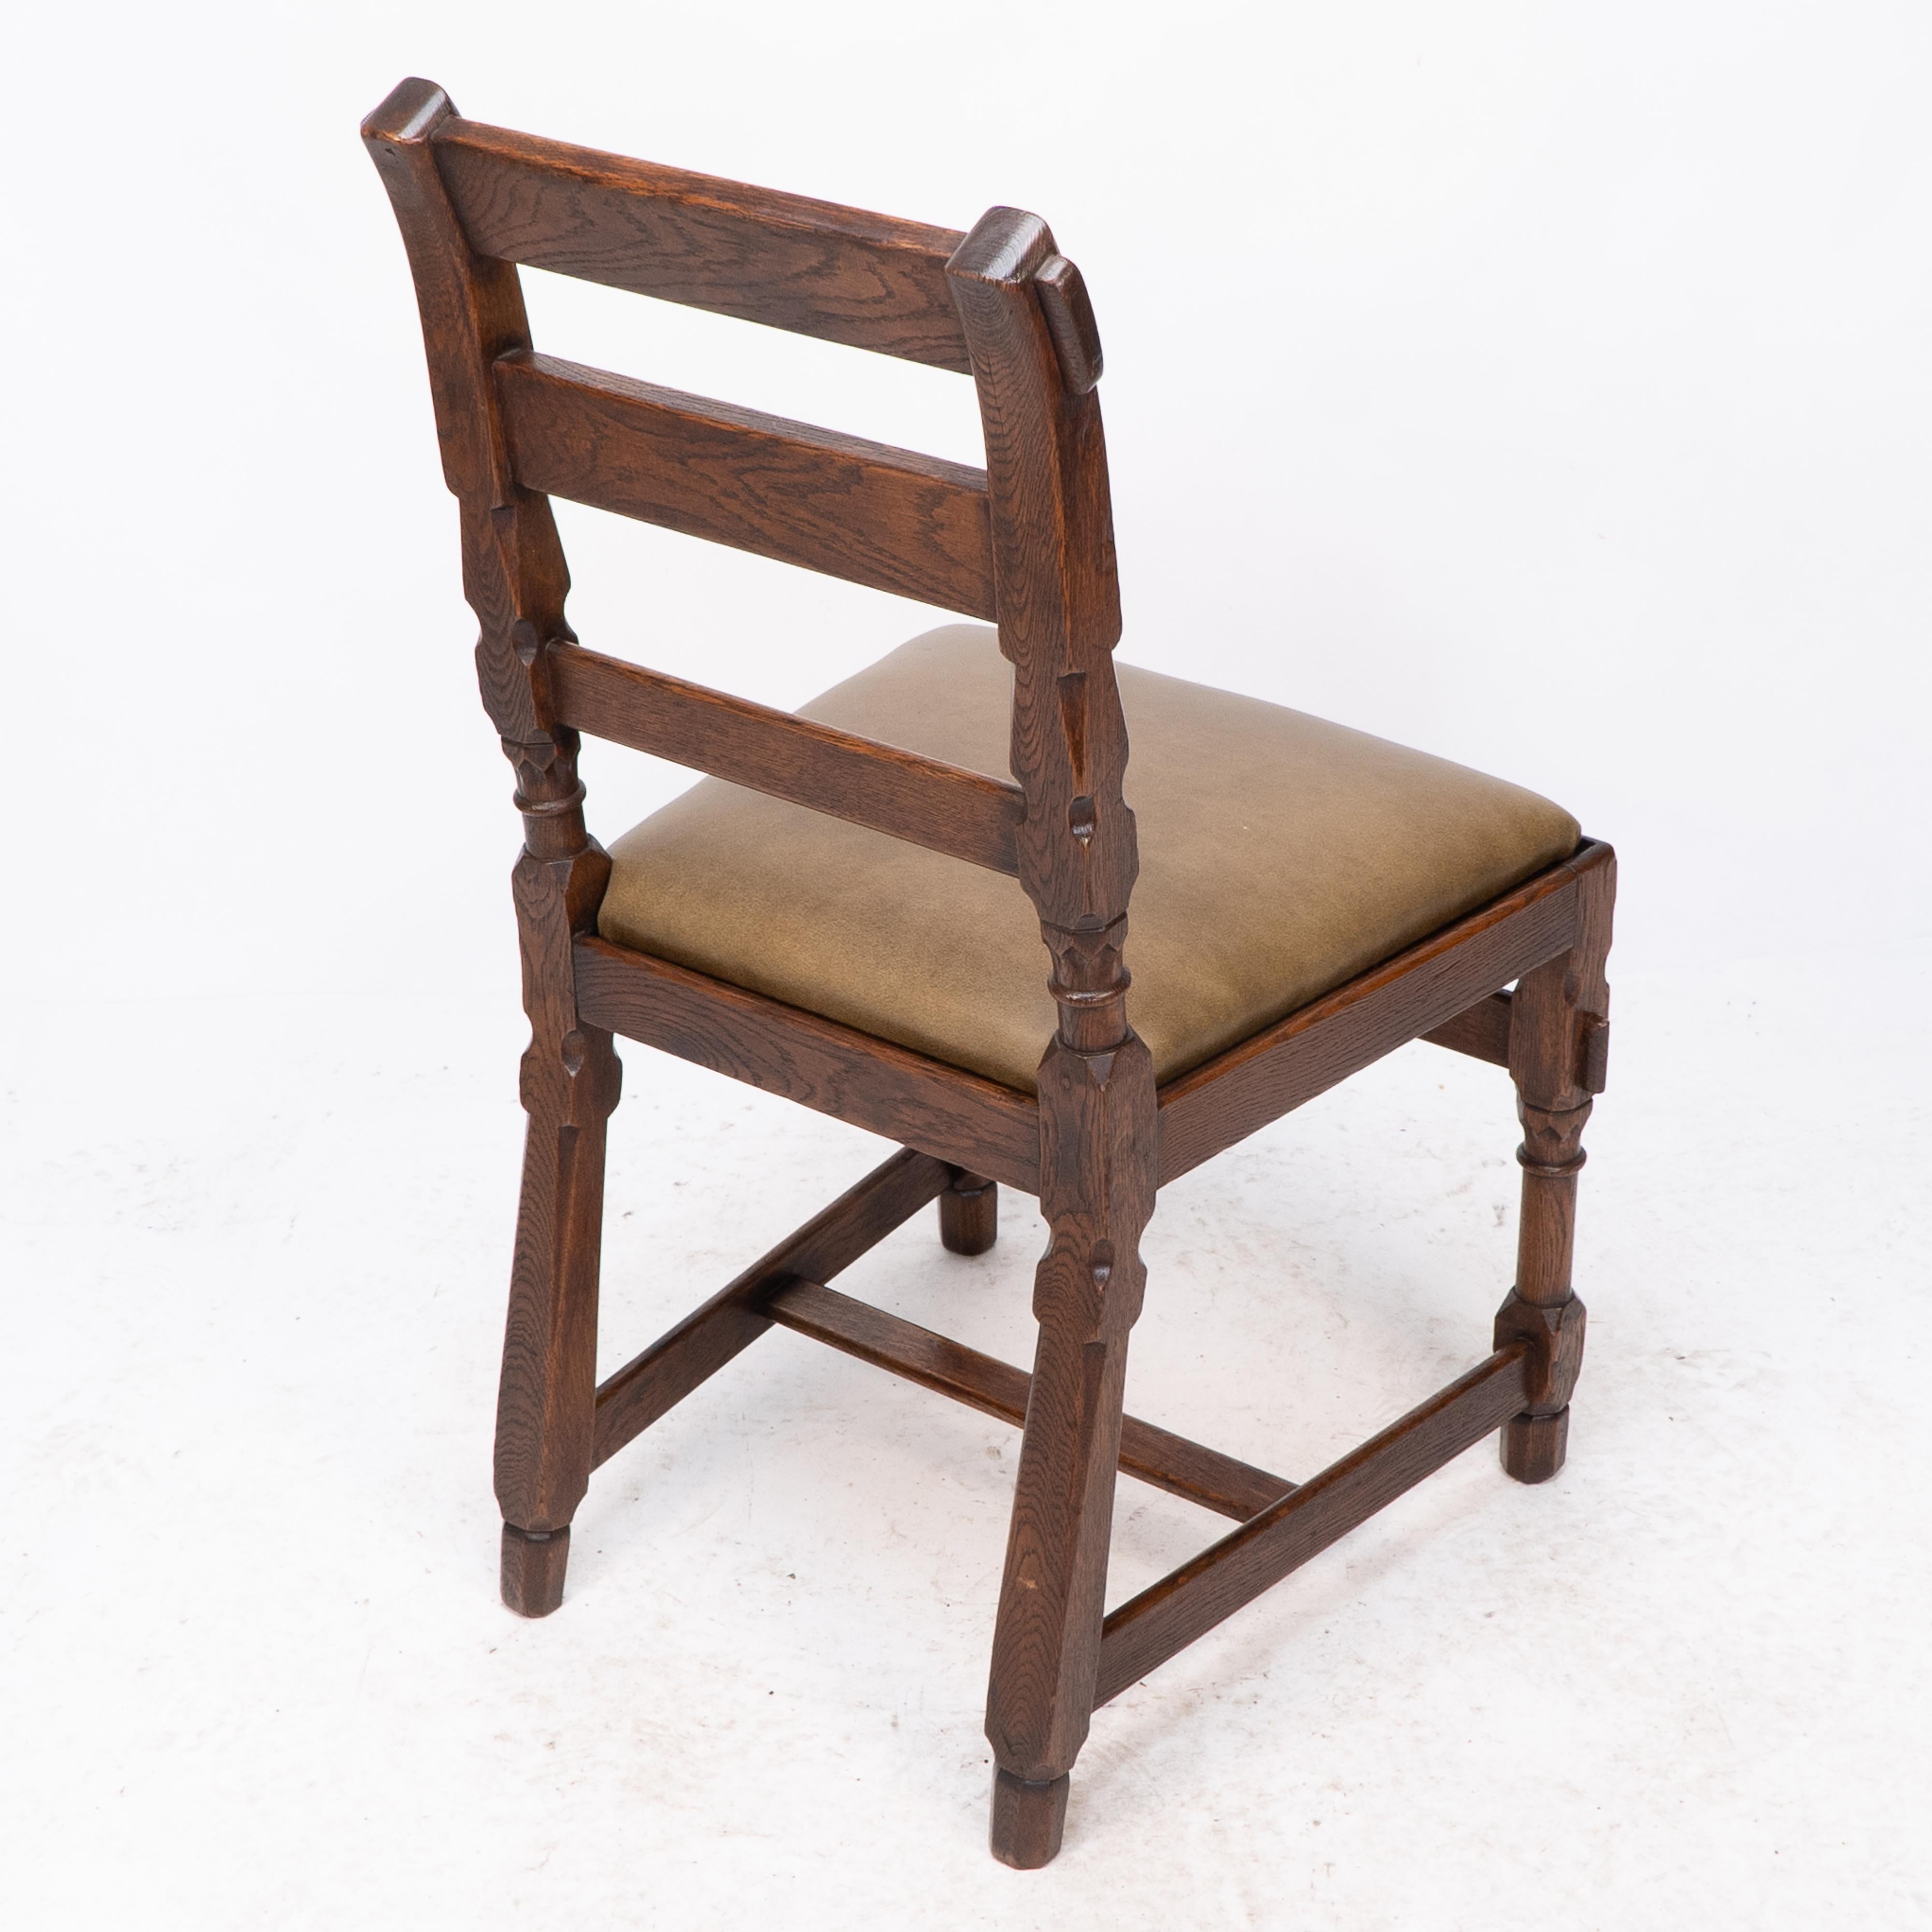 J P Seddon attri. An Aesthetic Movement oak side chair with ebonized circles For Sale 11